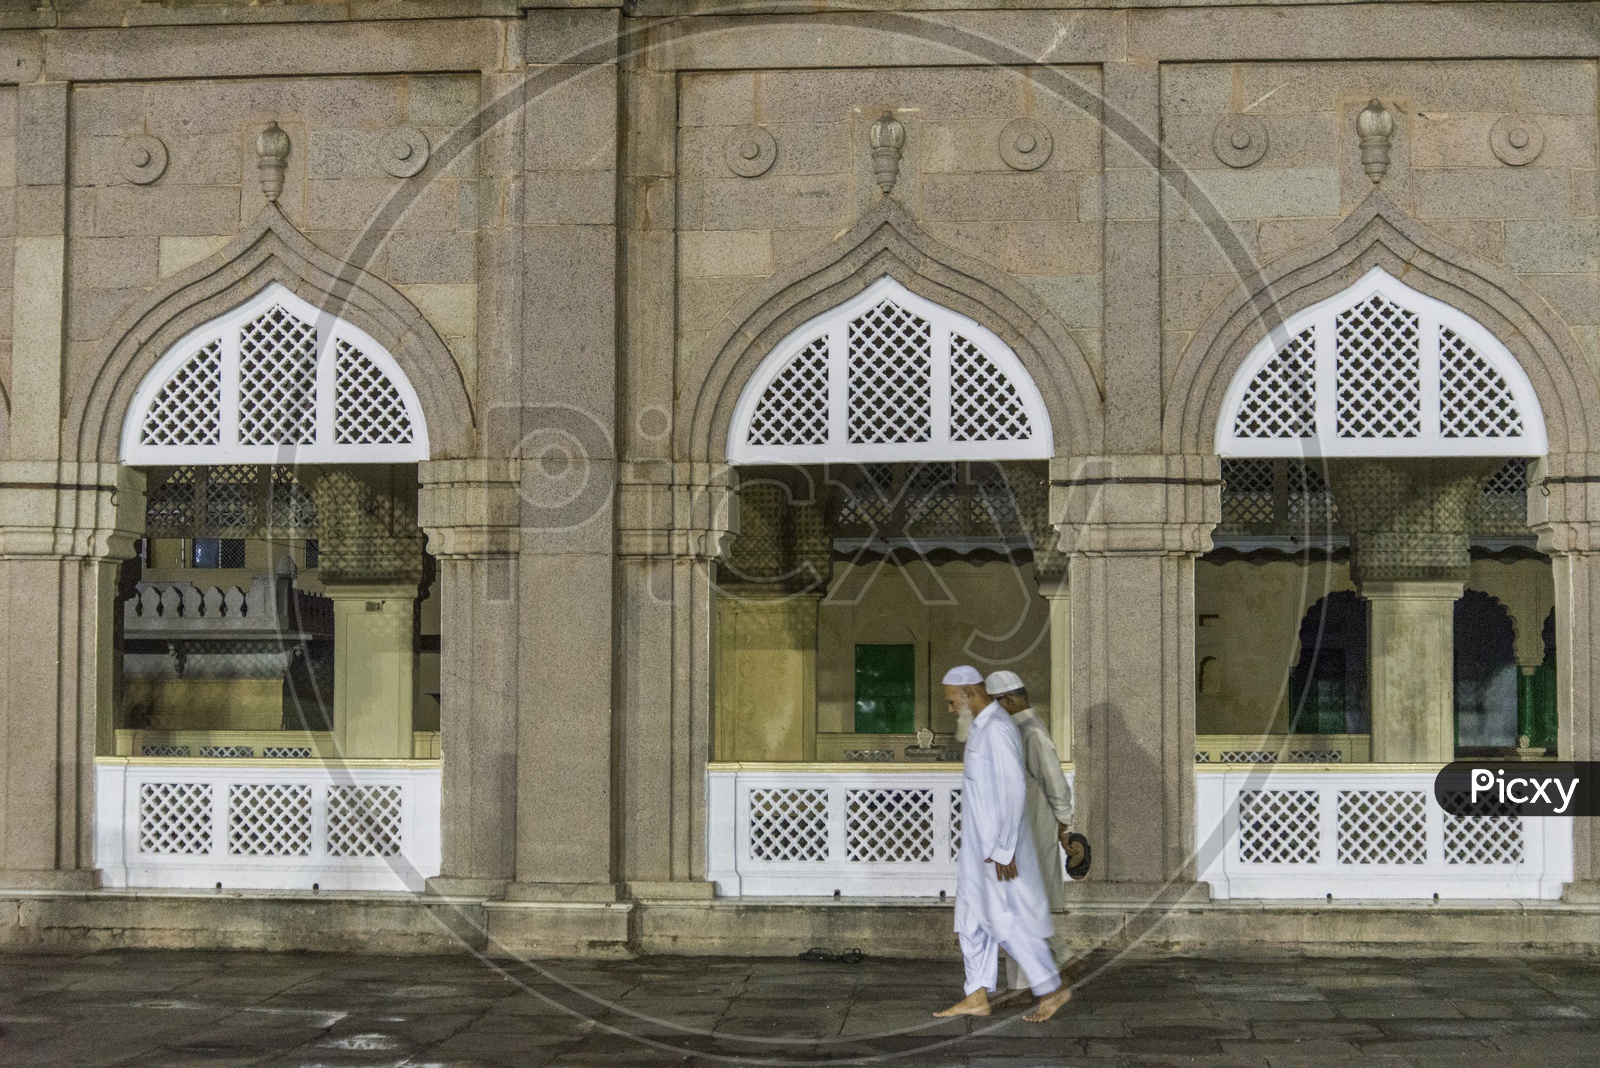 Old Muslim Man in Mecca Masjid, Hyderabad